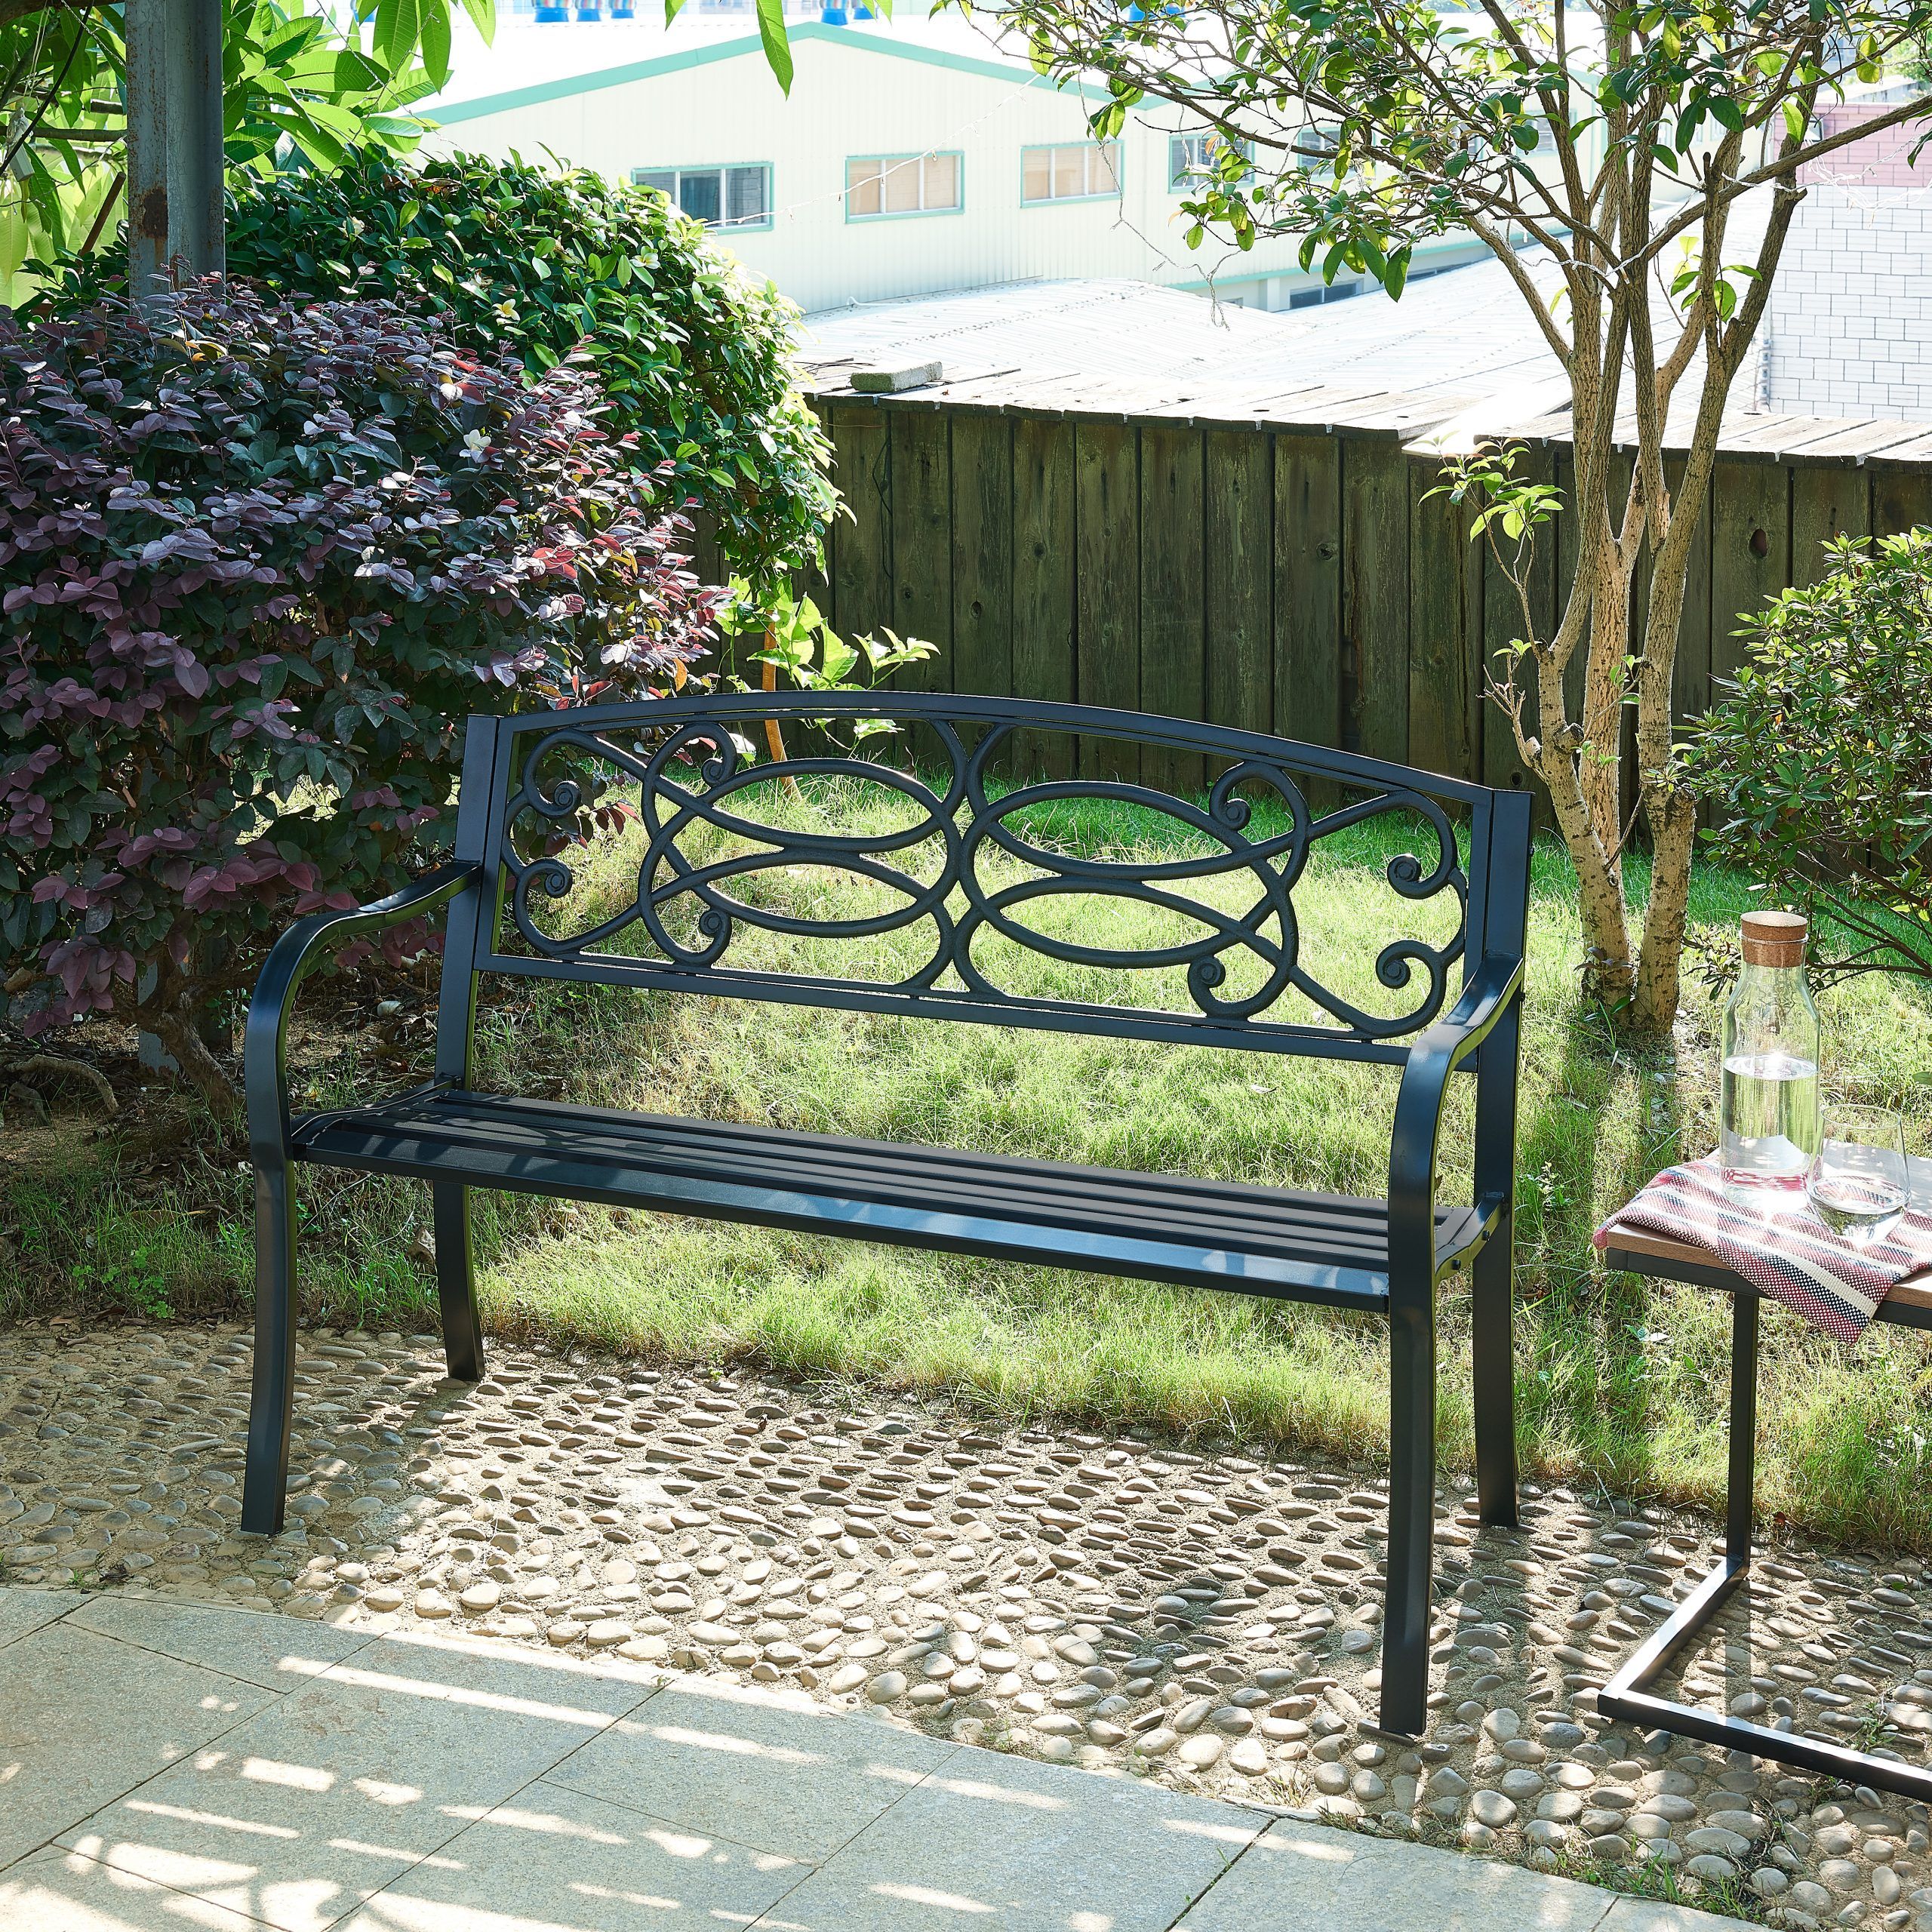 Details About Outdoor Cast Iron/Metal Garden Bench Seat Patio Furniture  Scroll Design Park Regarding Flamingo Metal Garden Benches (View 20 of 25)